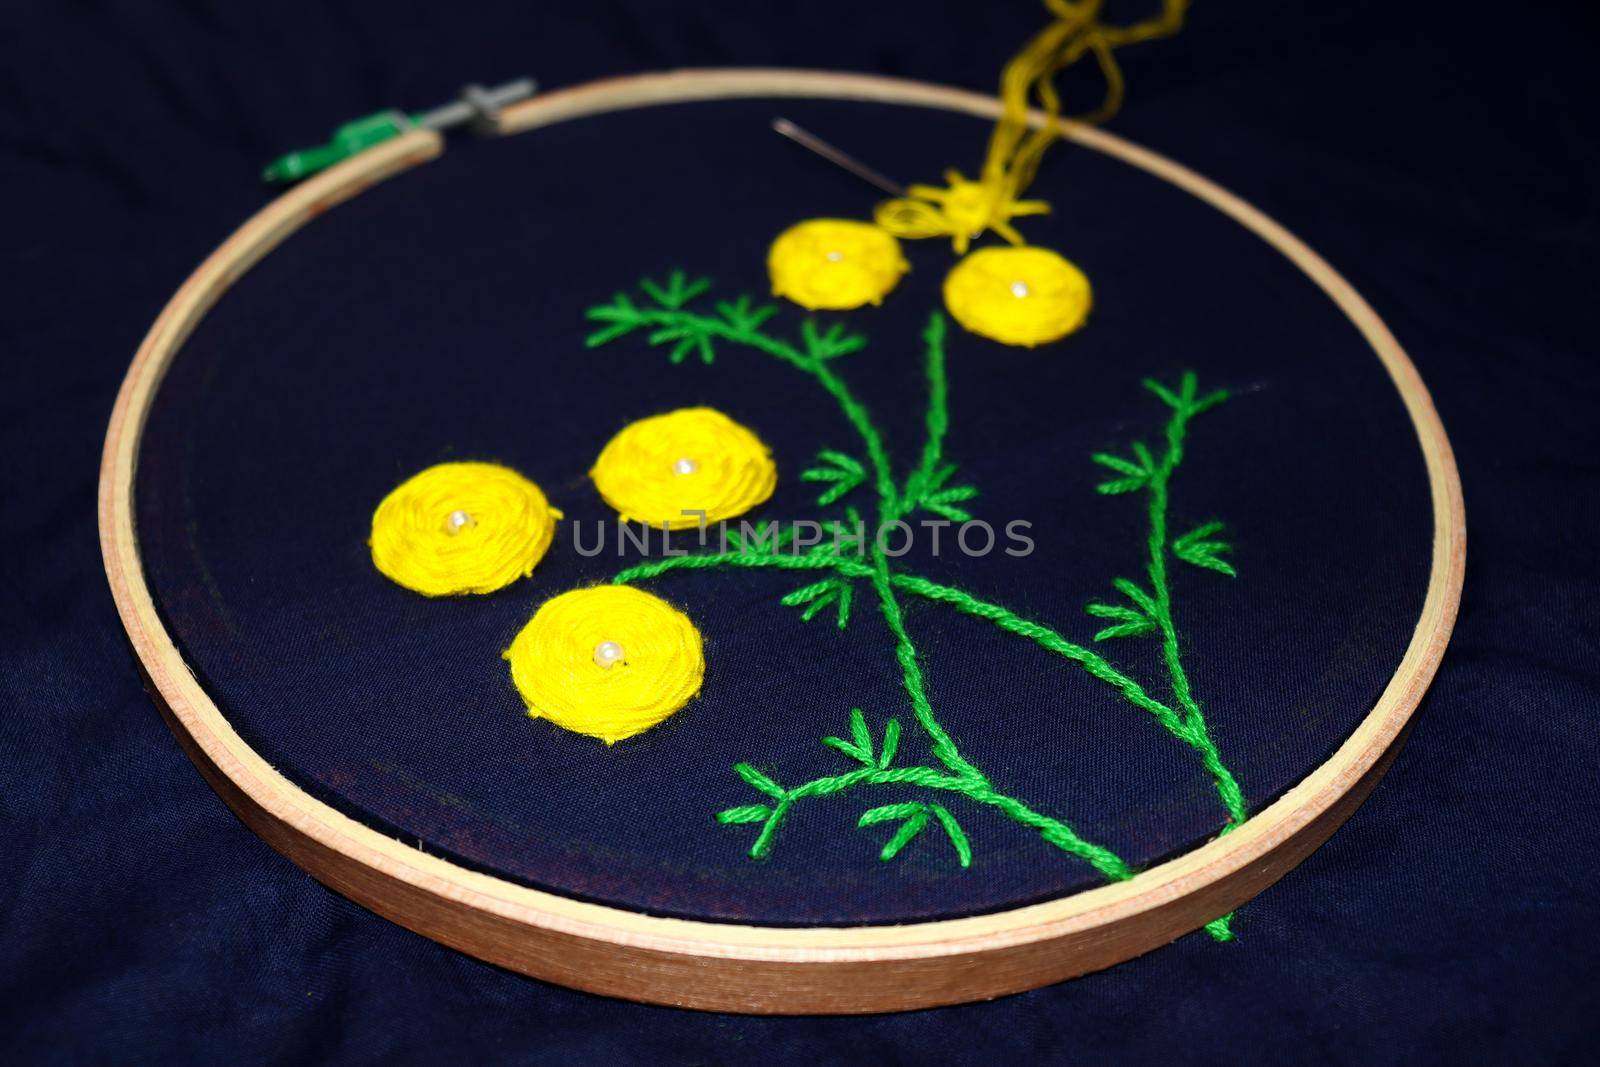 woolen handicraft work with circle frame on cloth by jahidul2358